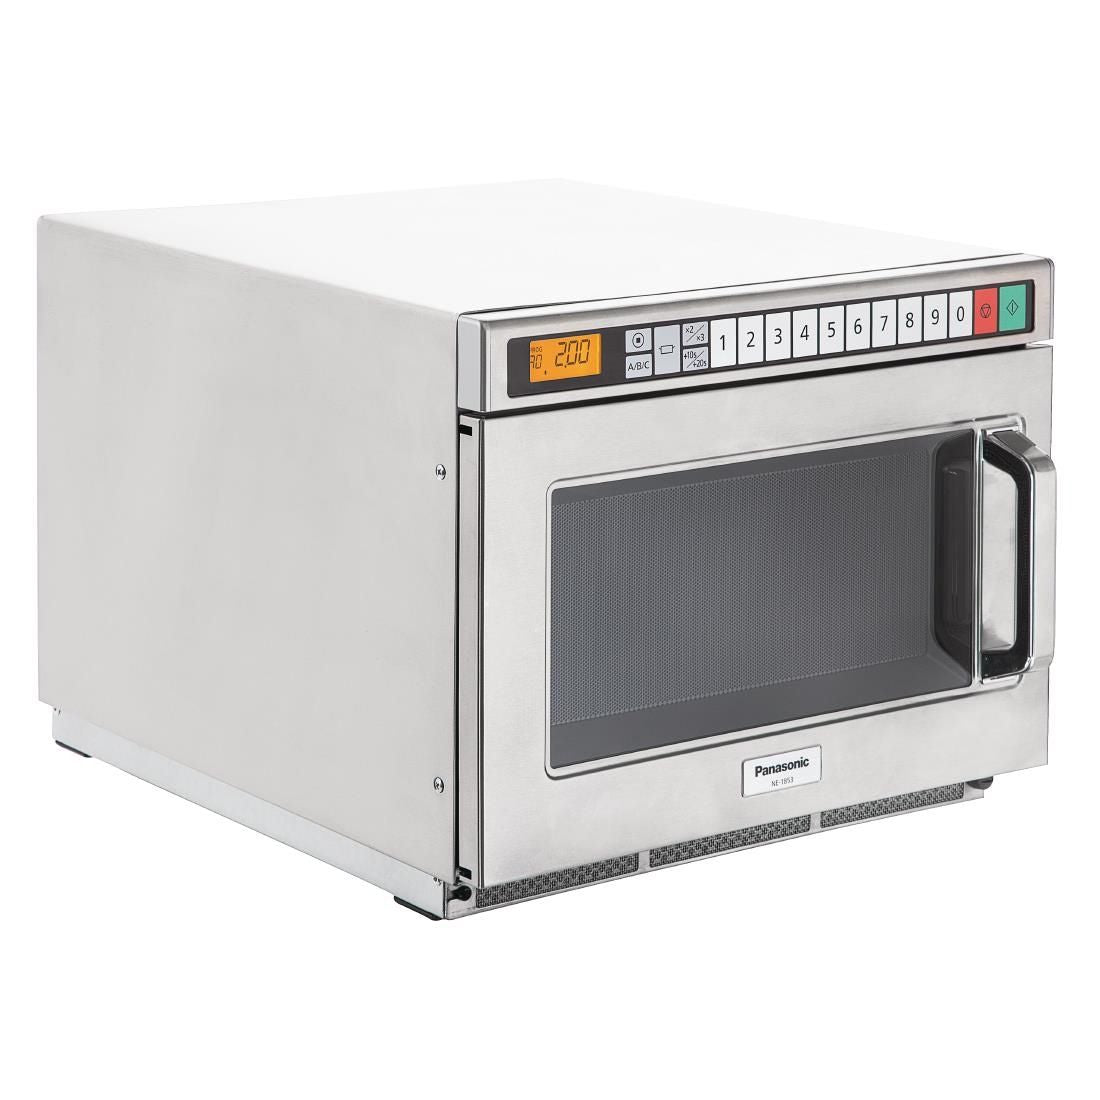 CD057 Panasonic 1800W Microwave Oven NE1853